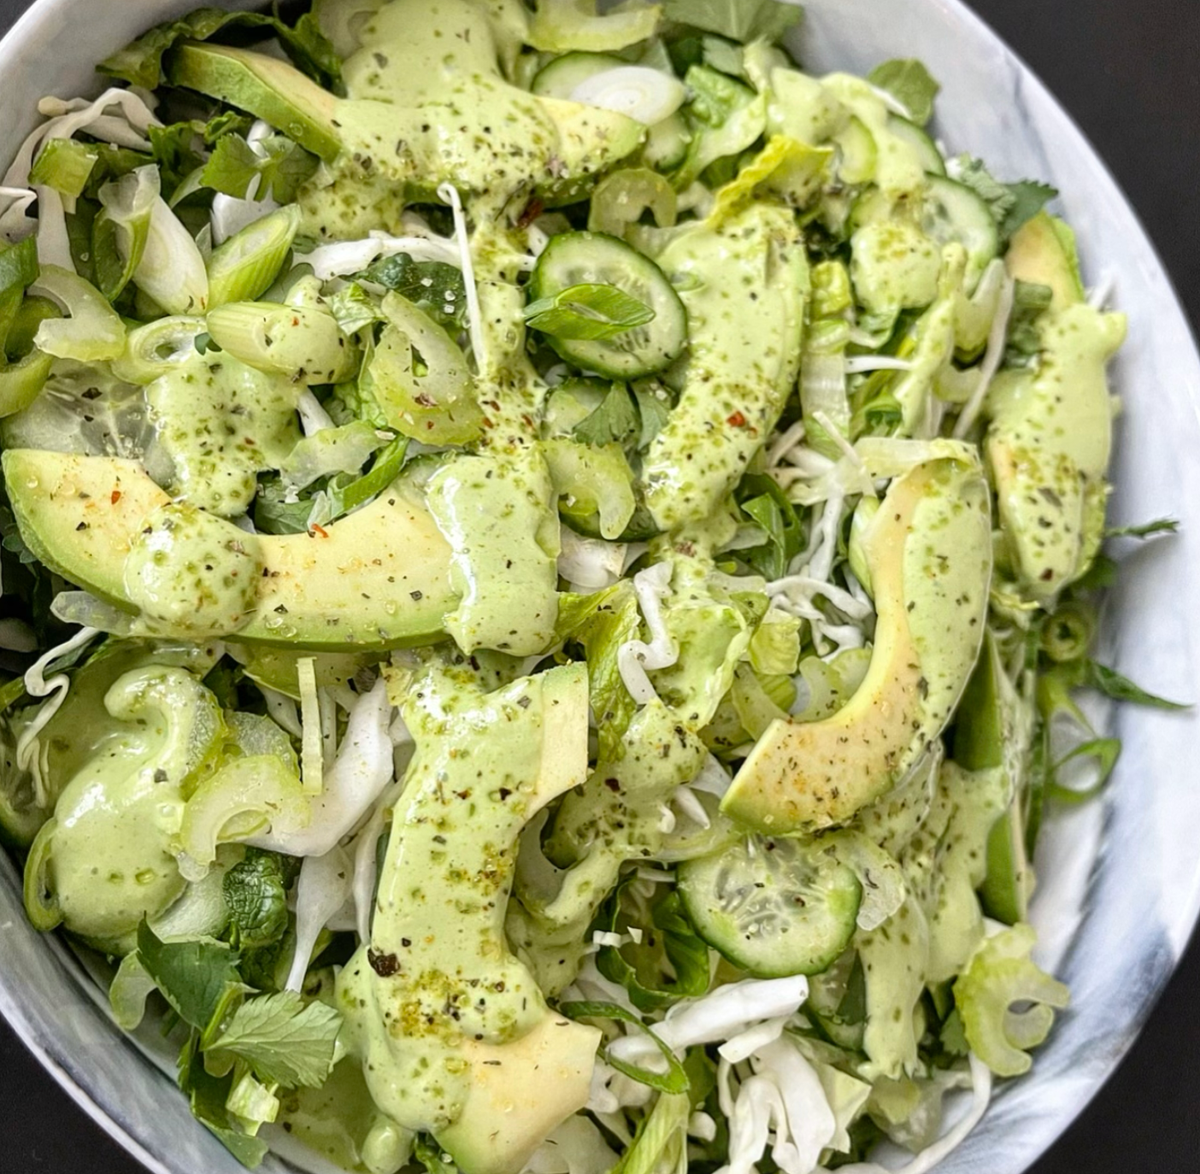 Green salad with avocado